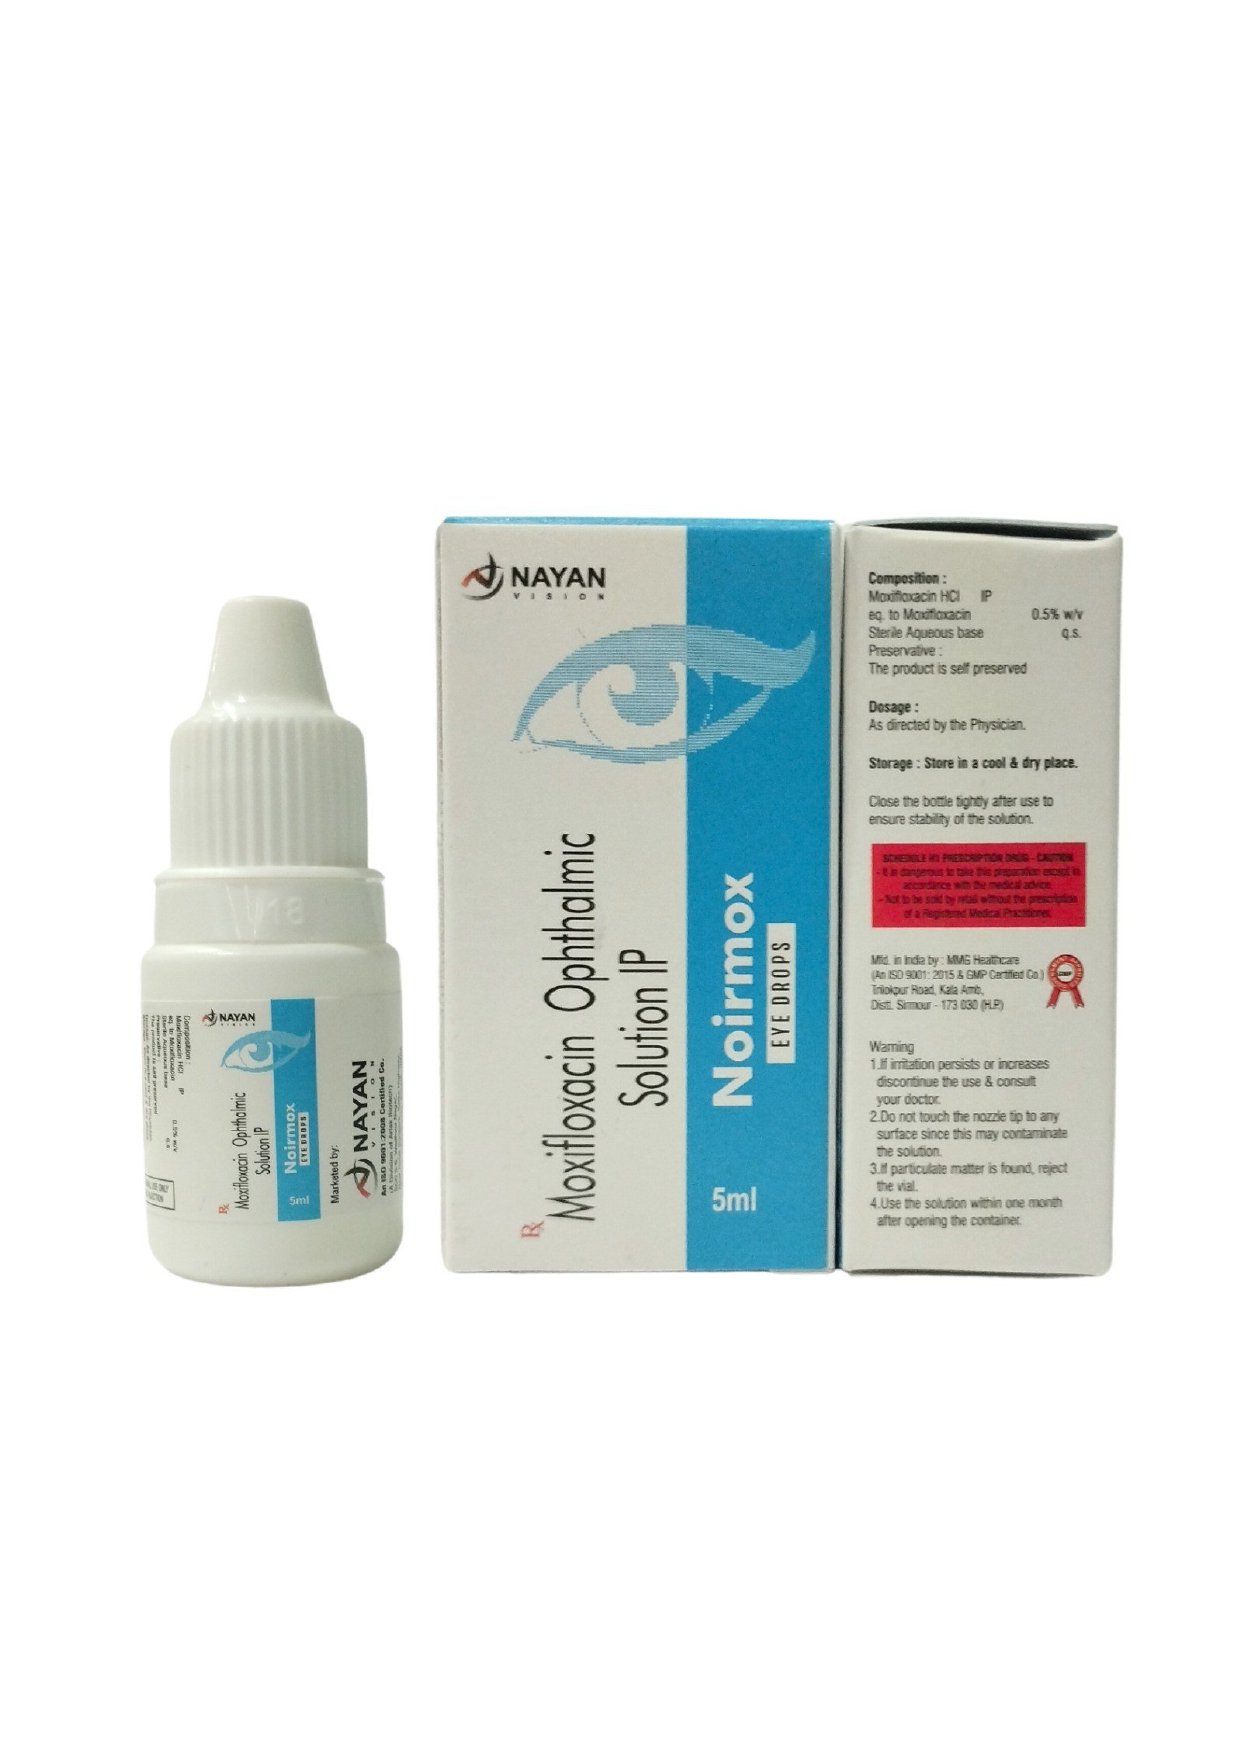 Noirmox - Moxifloxacin 0.5% Dexamethasone Sodium Phosphate 0.1% Eye Drops